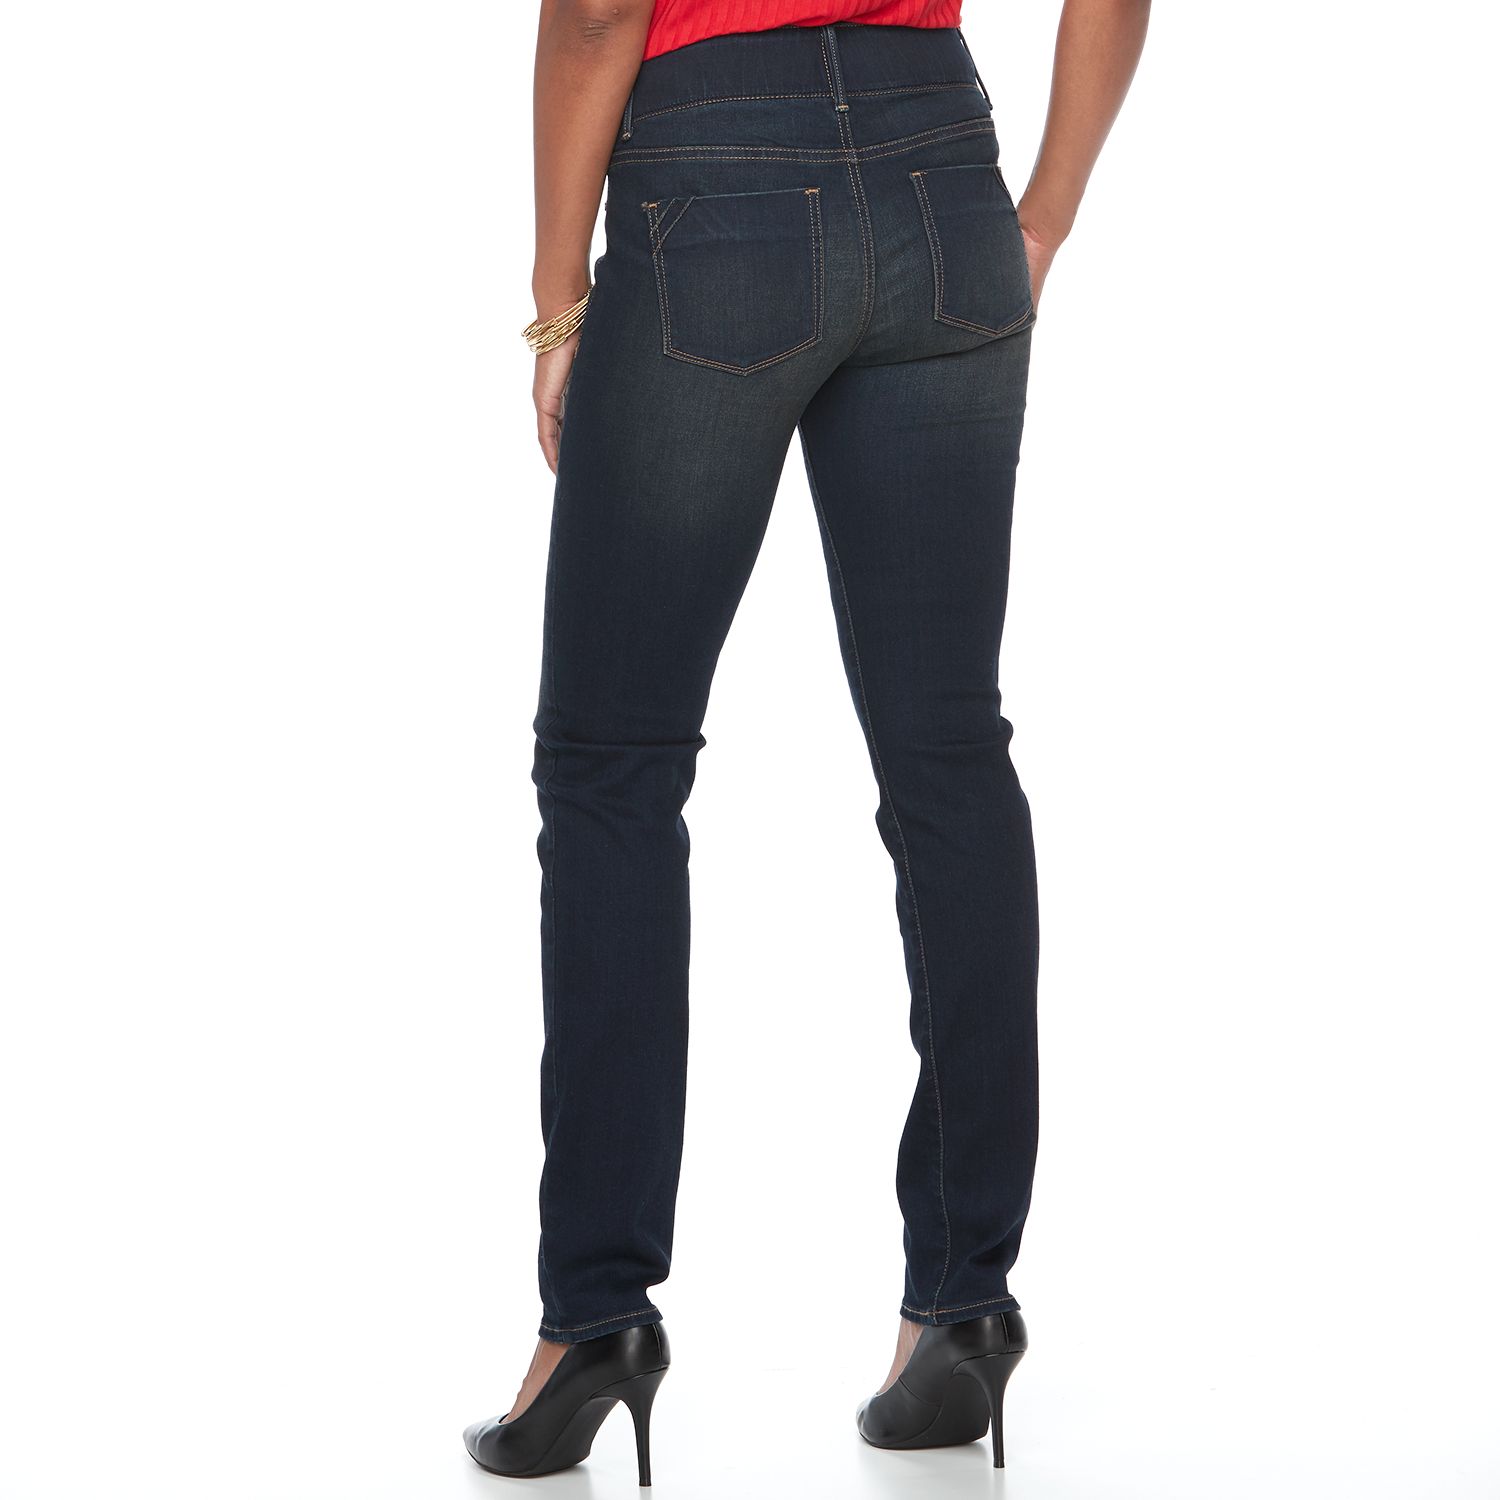 apt 9 jeans straight fit